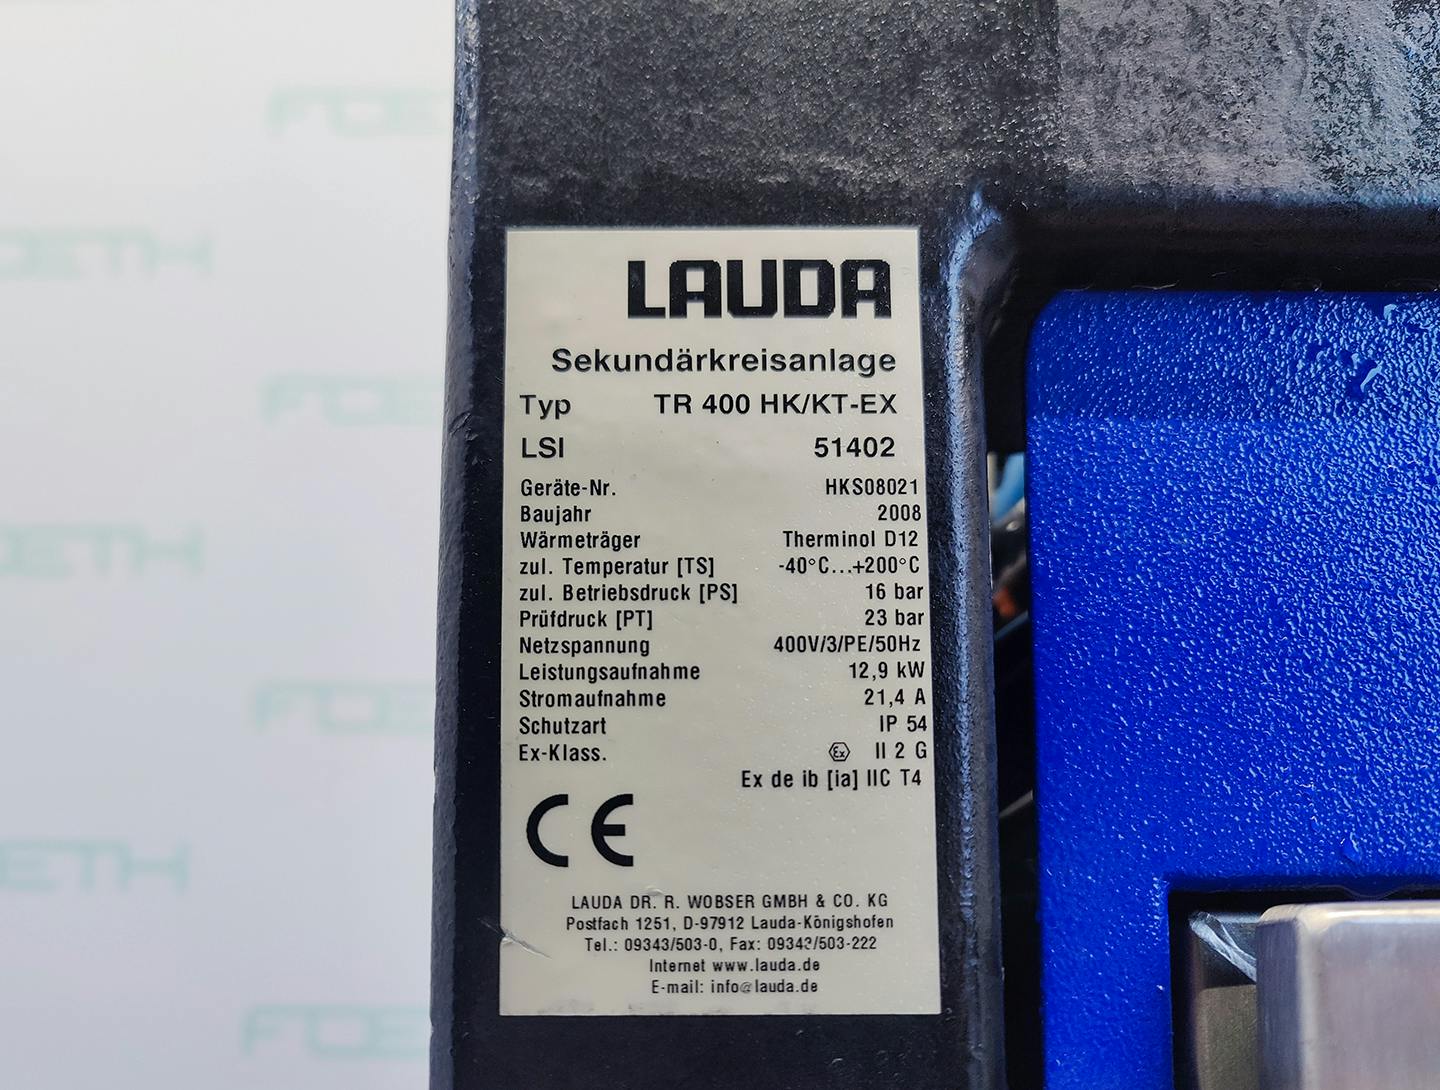 Lauda TR400 HK/KT-EX "secondary circuit system" - Temperiergerät - image 6